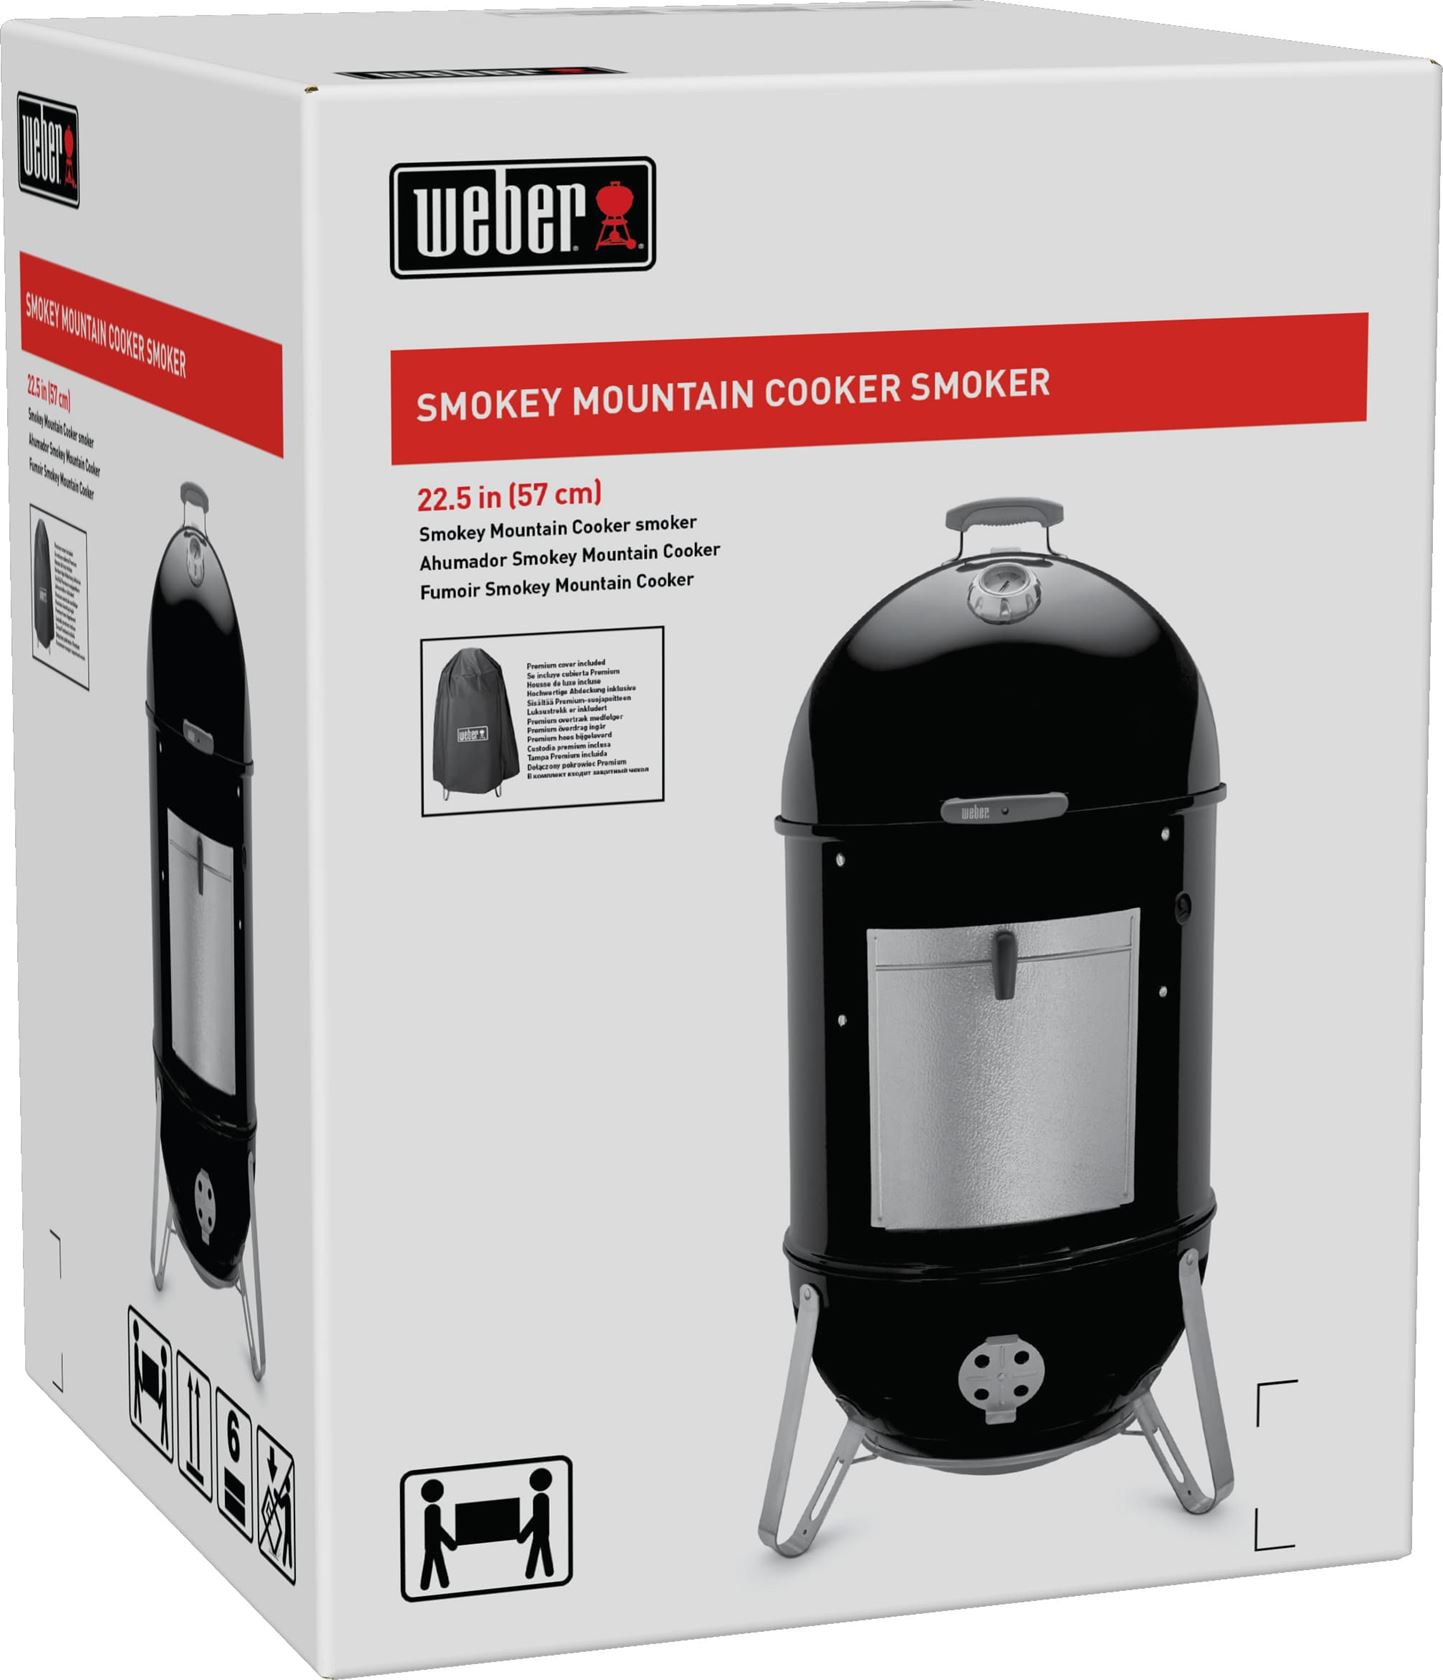 Smokey-Mountain-Cooker-57cm-Black